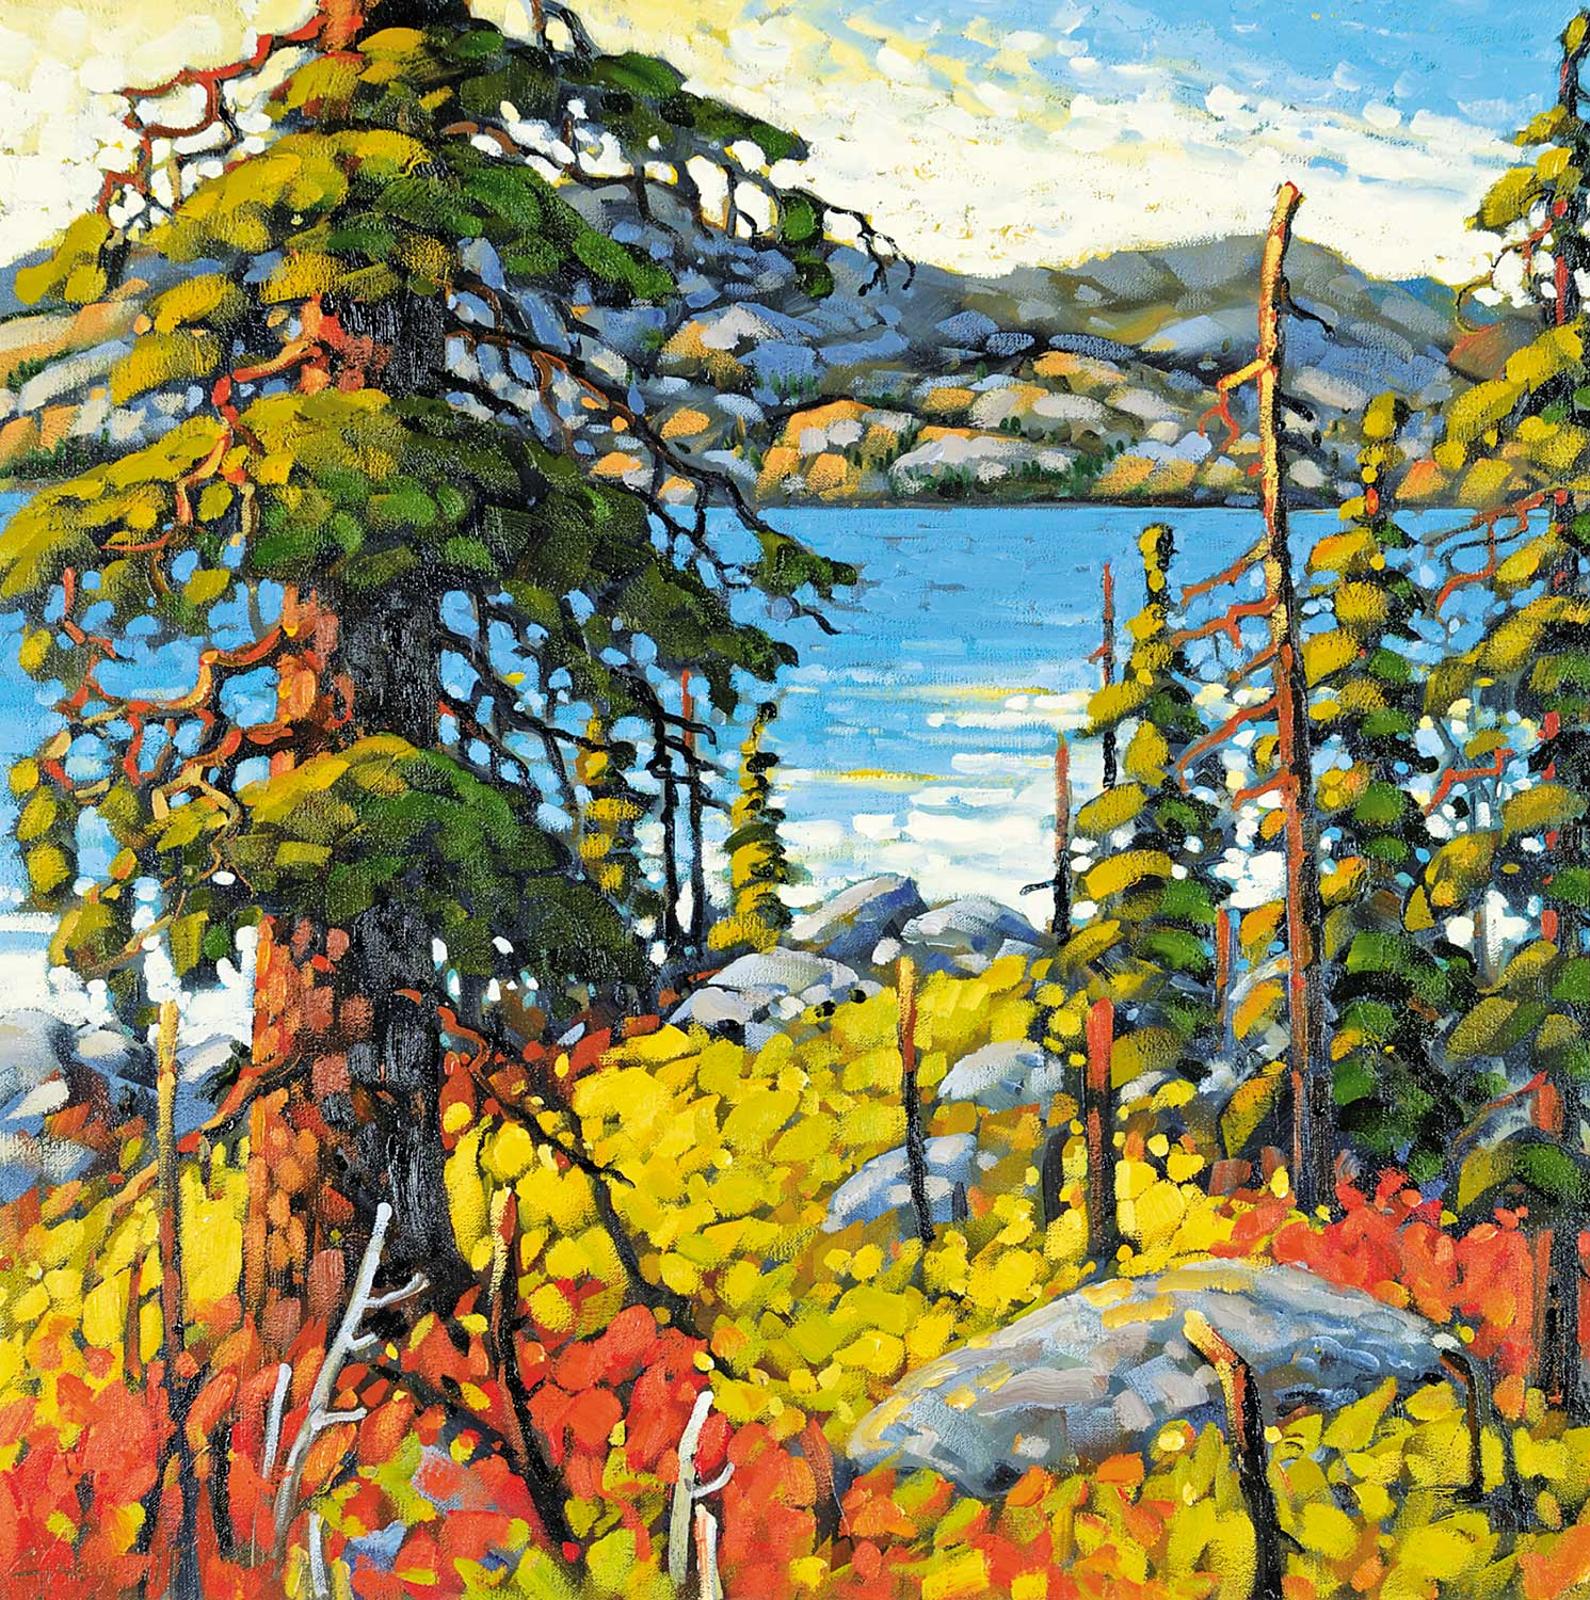 Rod Charlesworth (1955) - Okanagan Lake, North